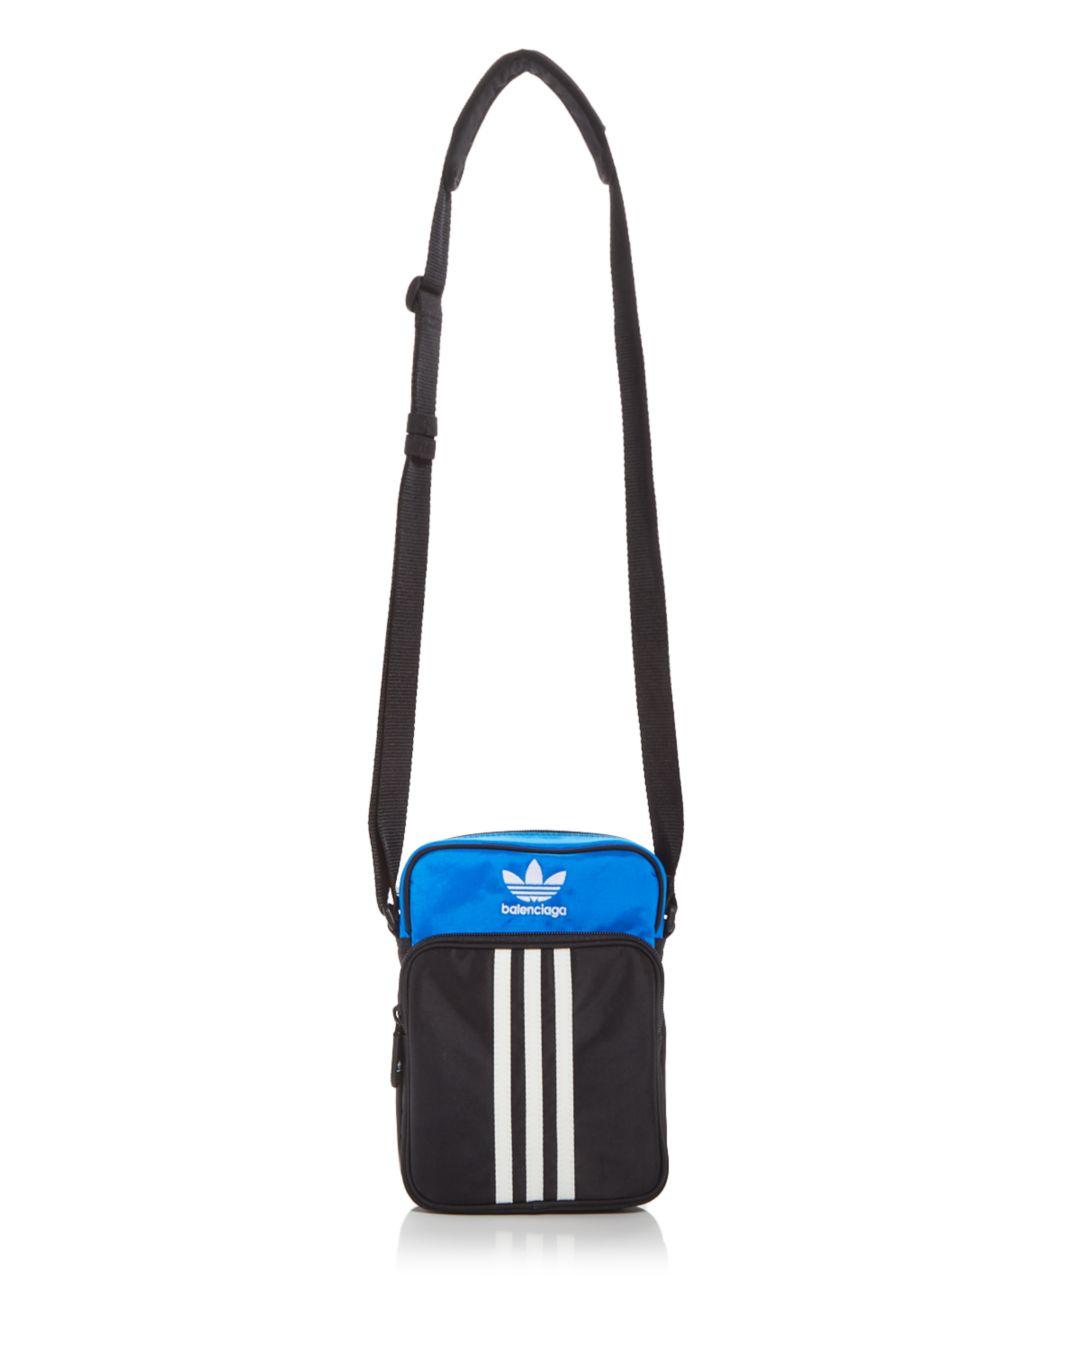 Balenciaga X Adidas Small Crossbody Messenger Bag in Blue for Men | Lyst